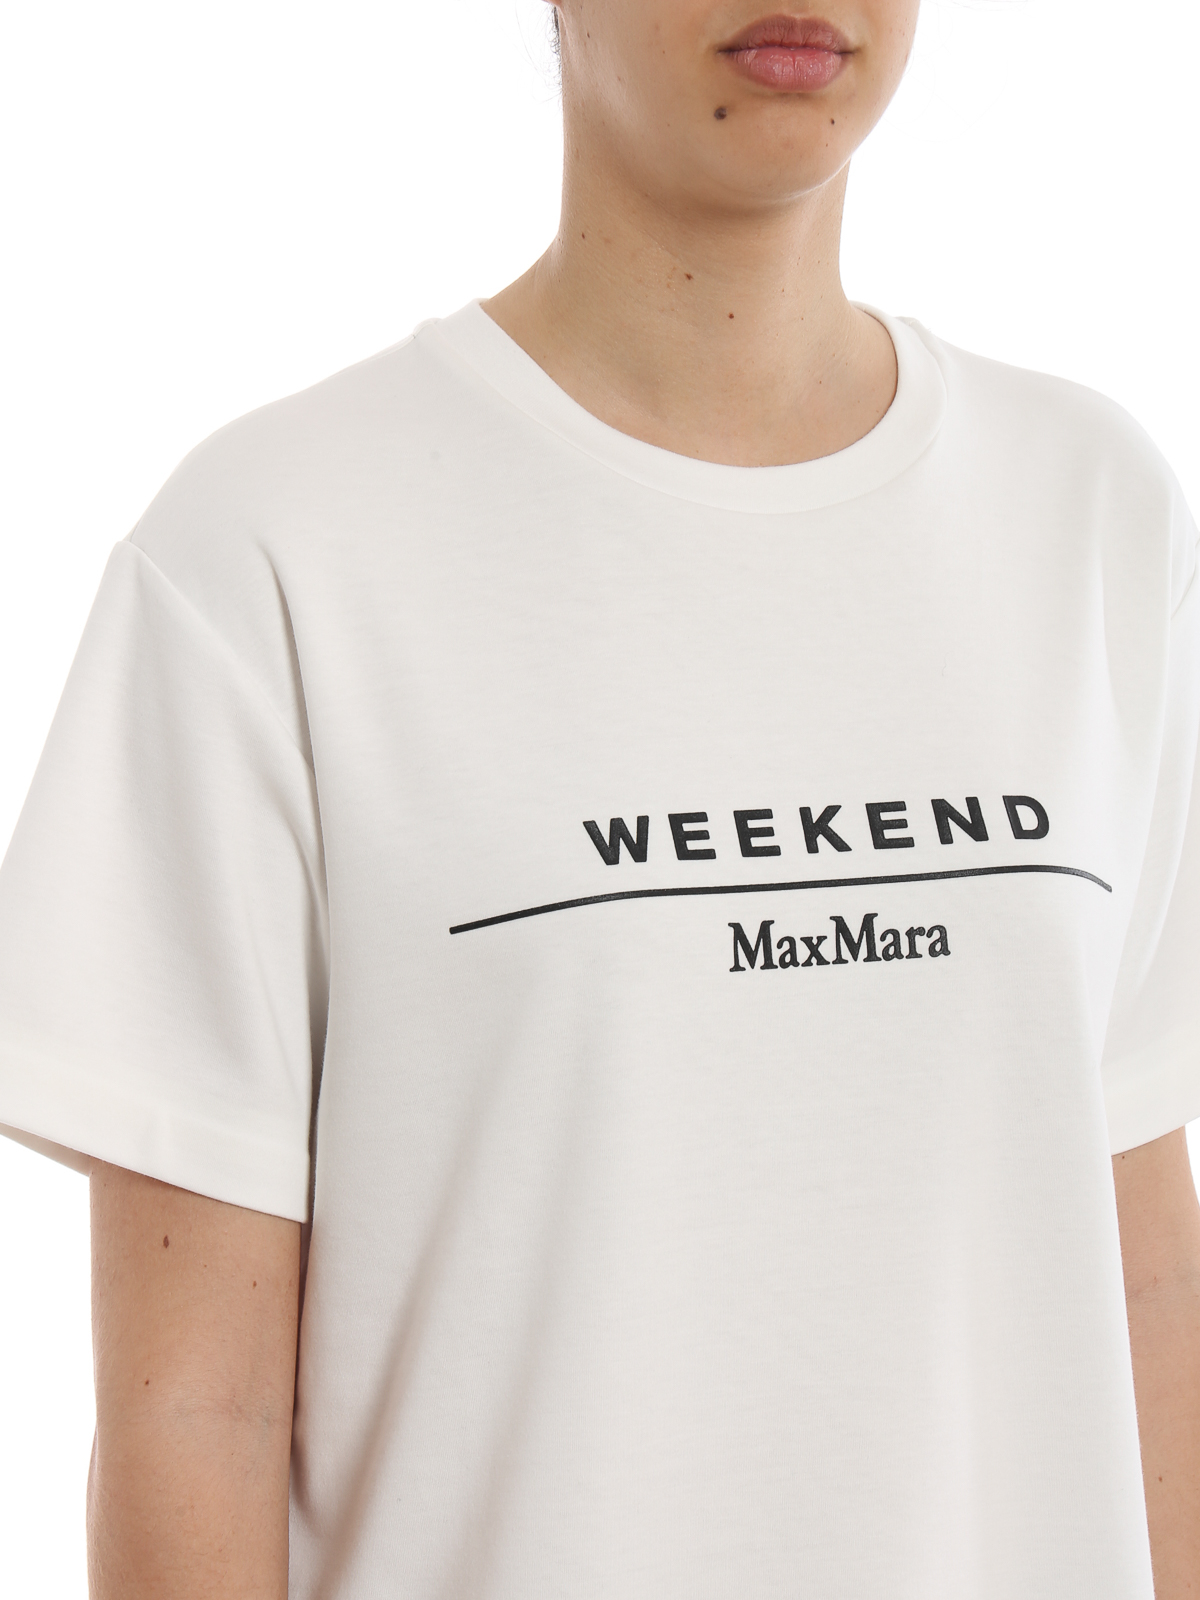 Querido Especificado Disfraz Max Mara Weekend T Shirts Sale Online, UP TO 59% OFF | www.apmusicales.com